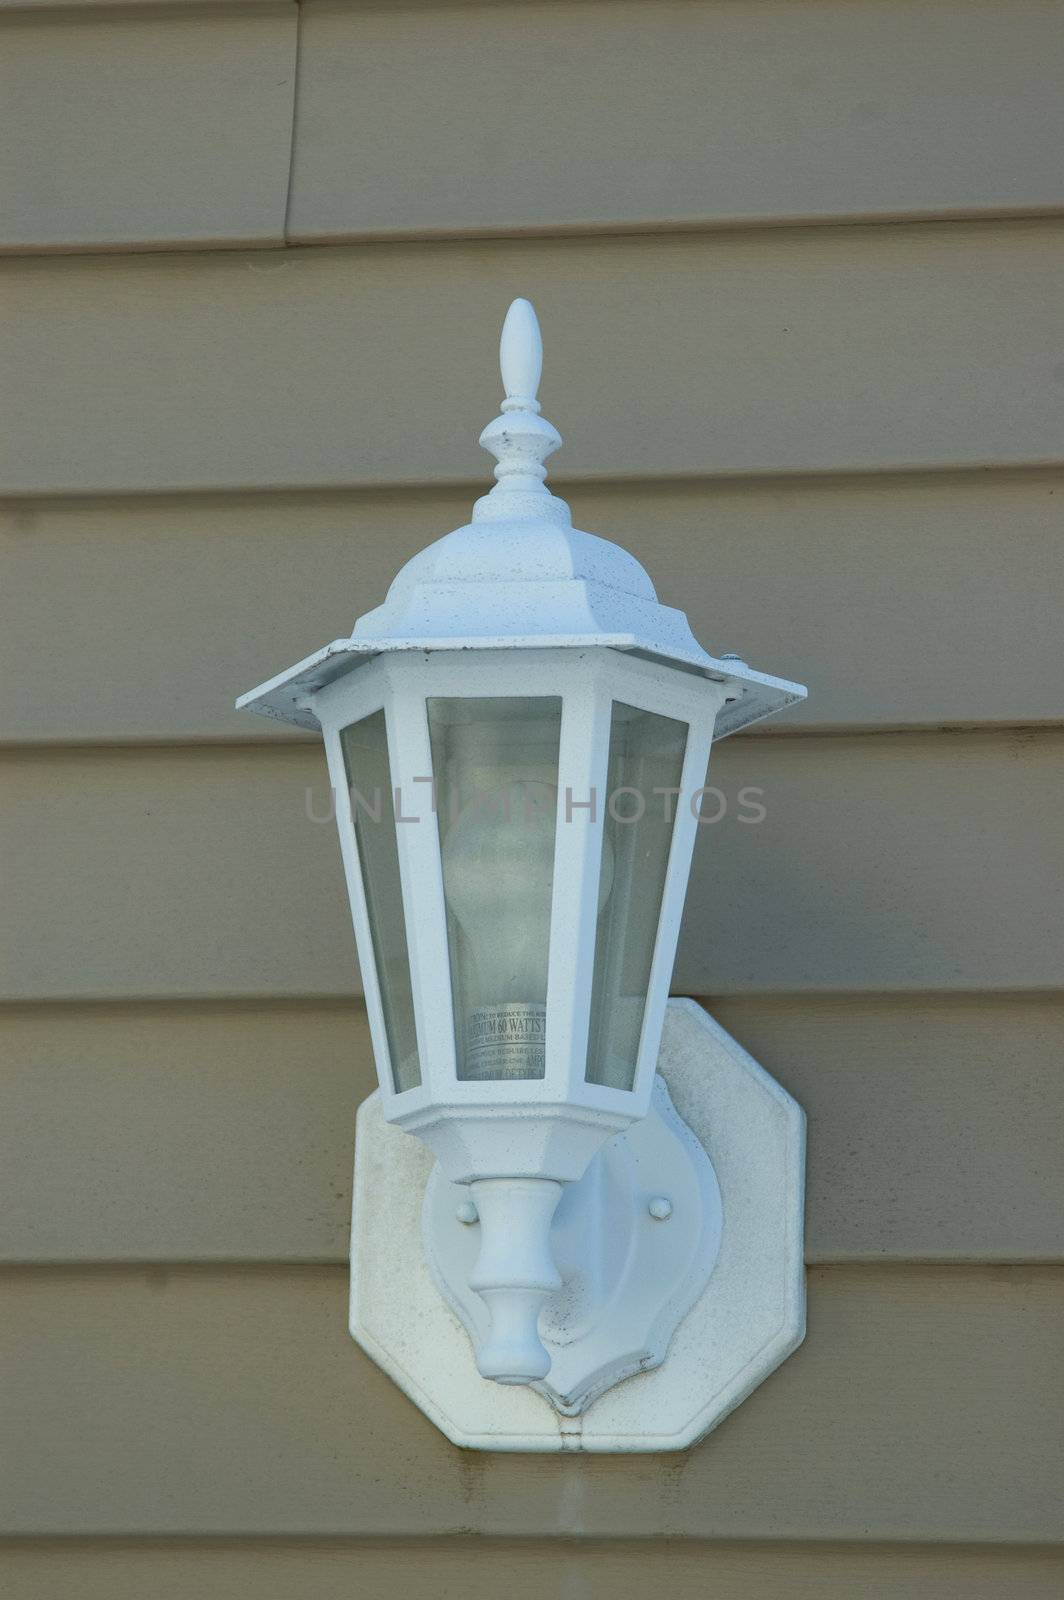 A white porch light against a brown vinal siding